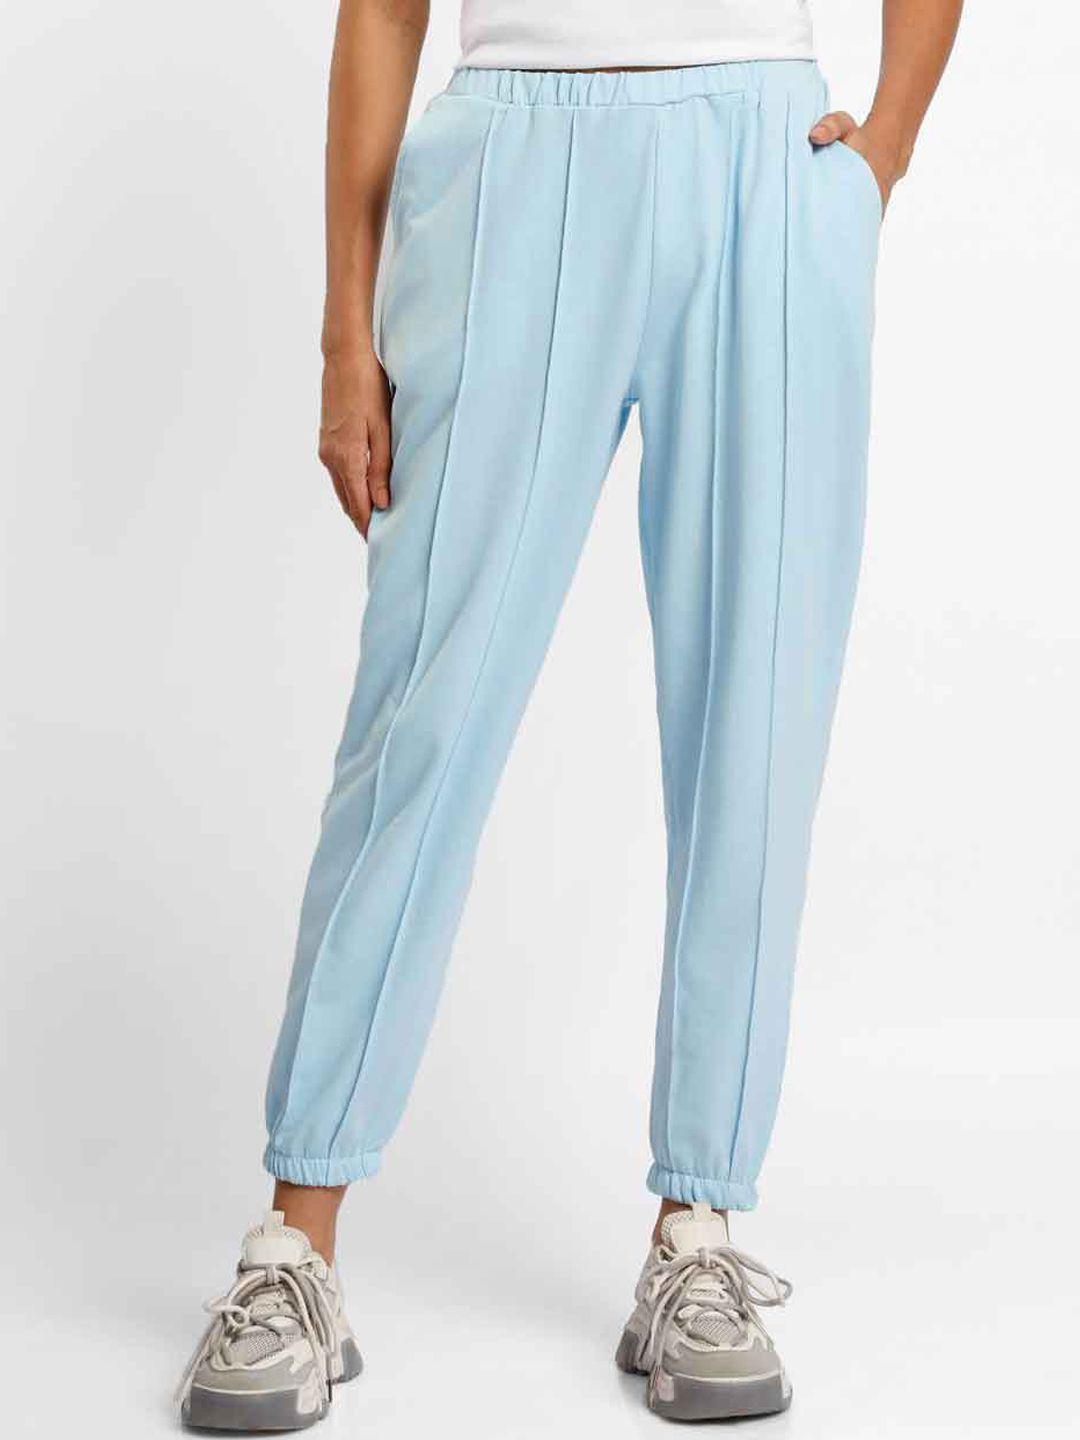 nobero women blue striped joggers trousers